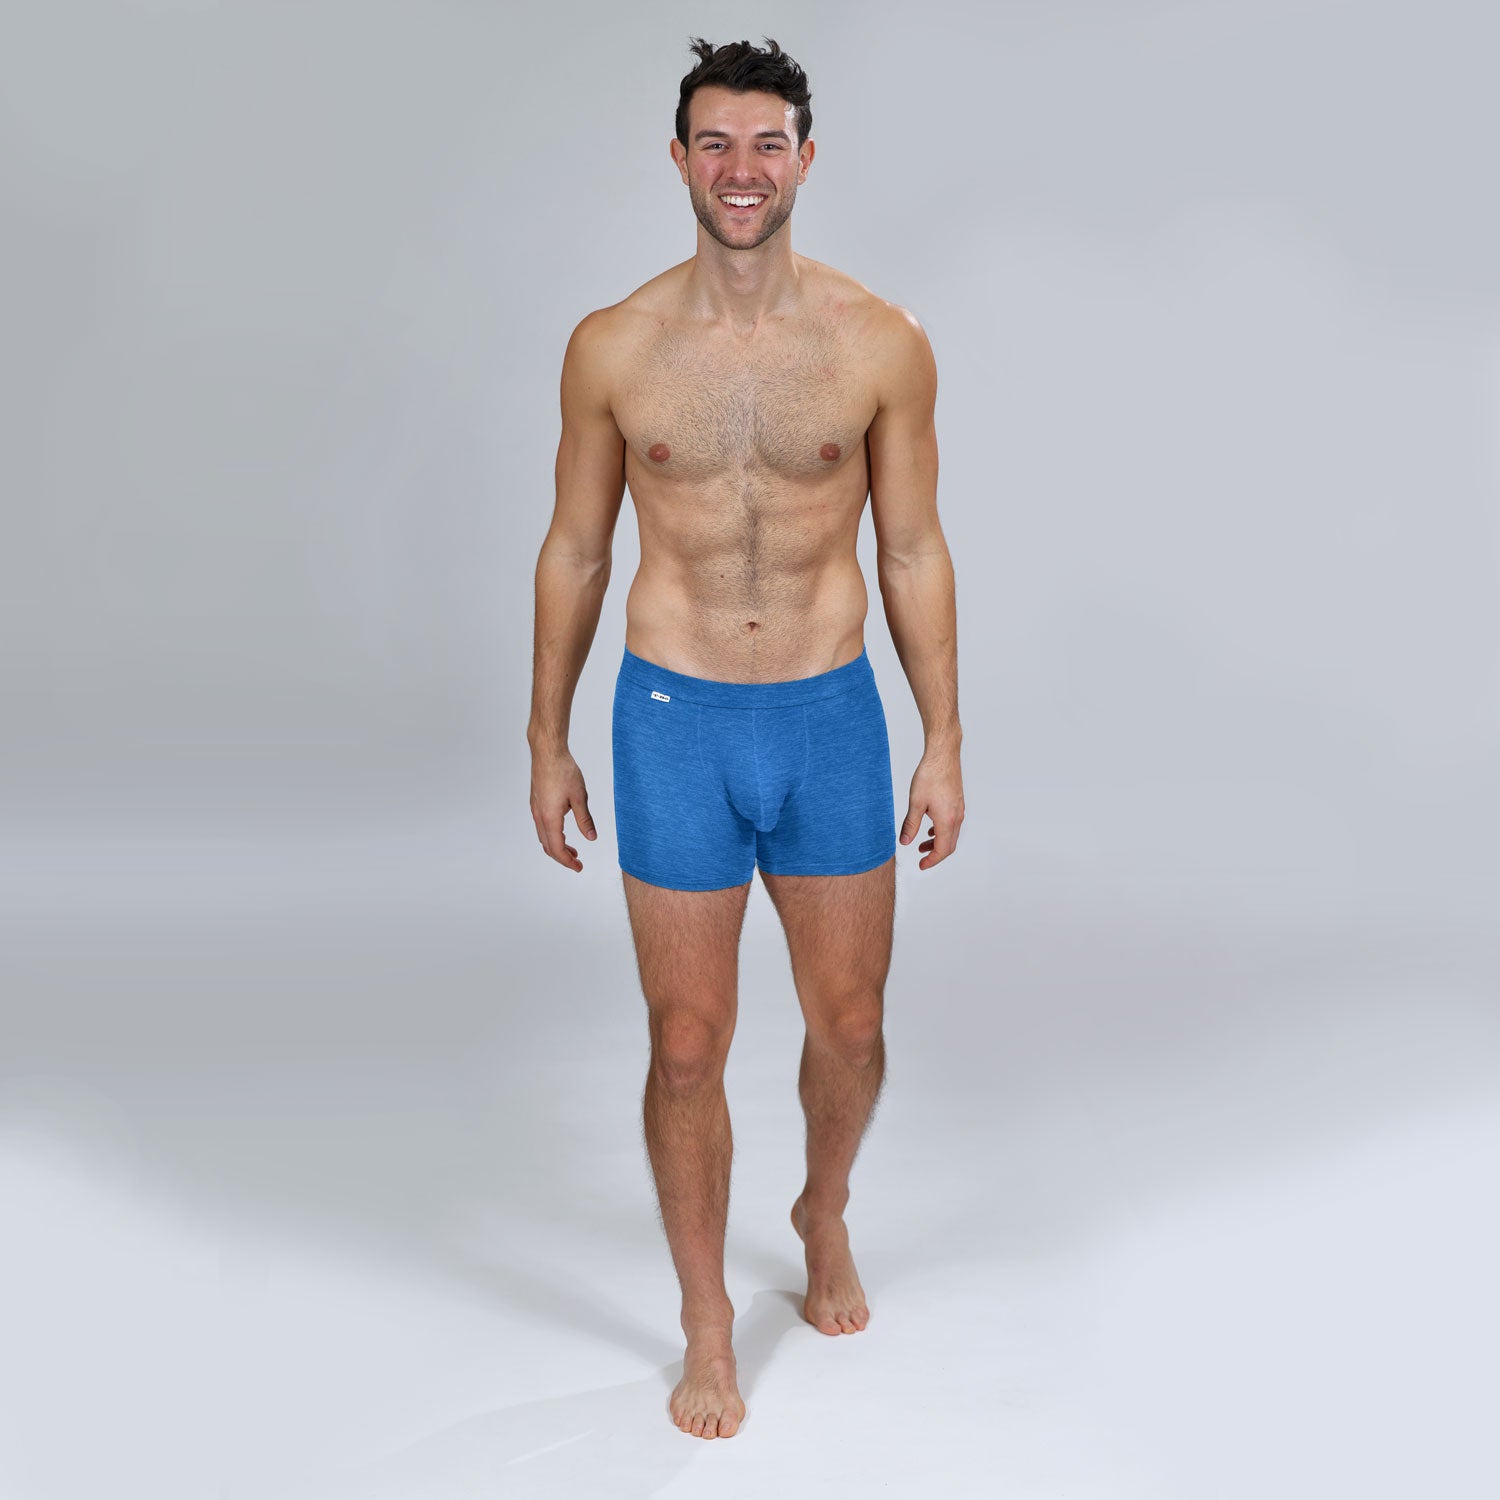 T-Bô underwear for men (tbo_underwear) - Profile